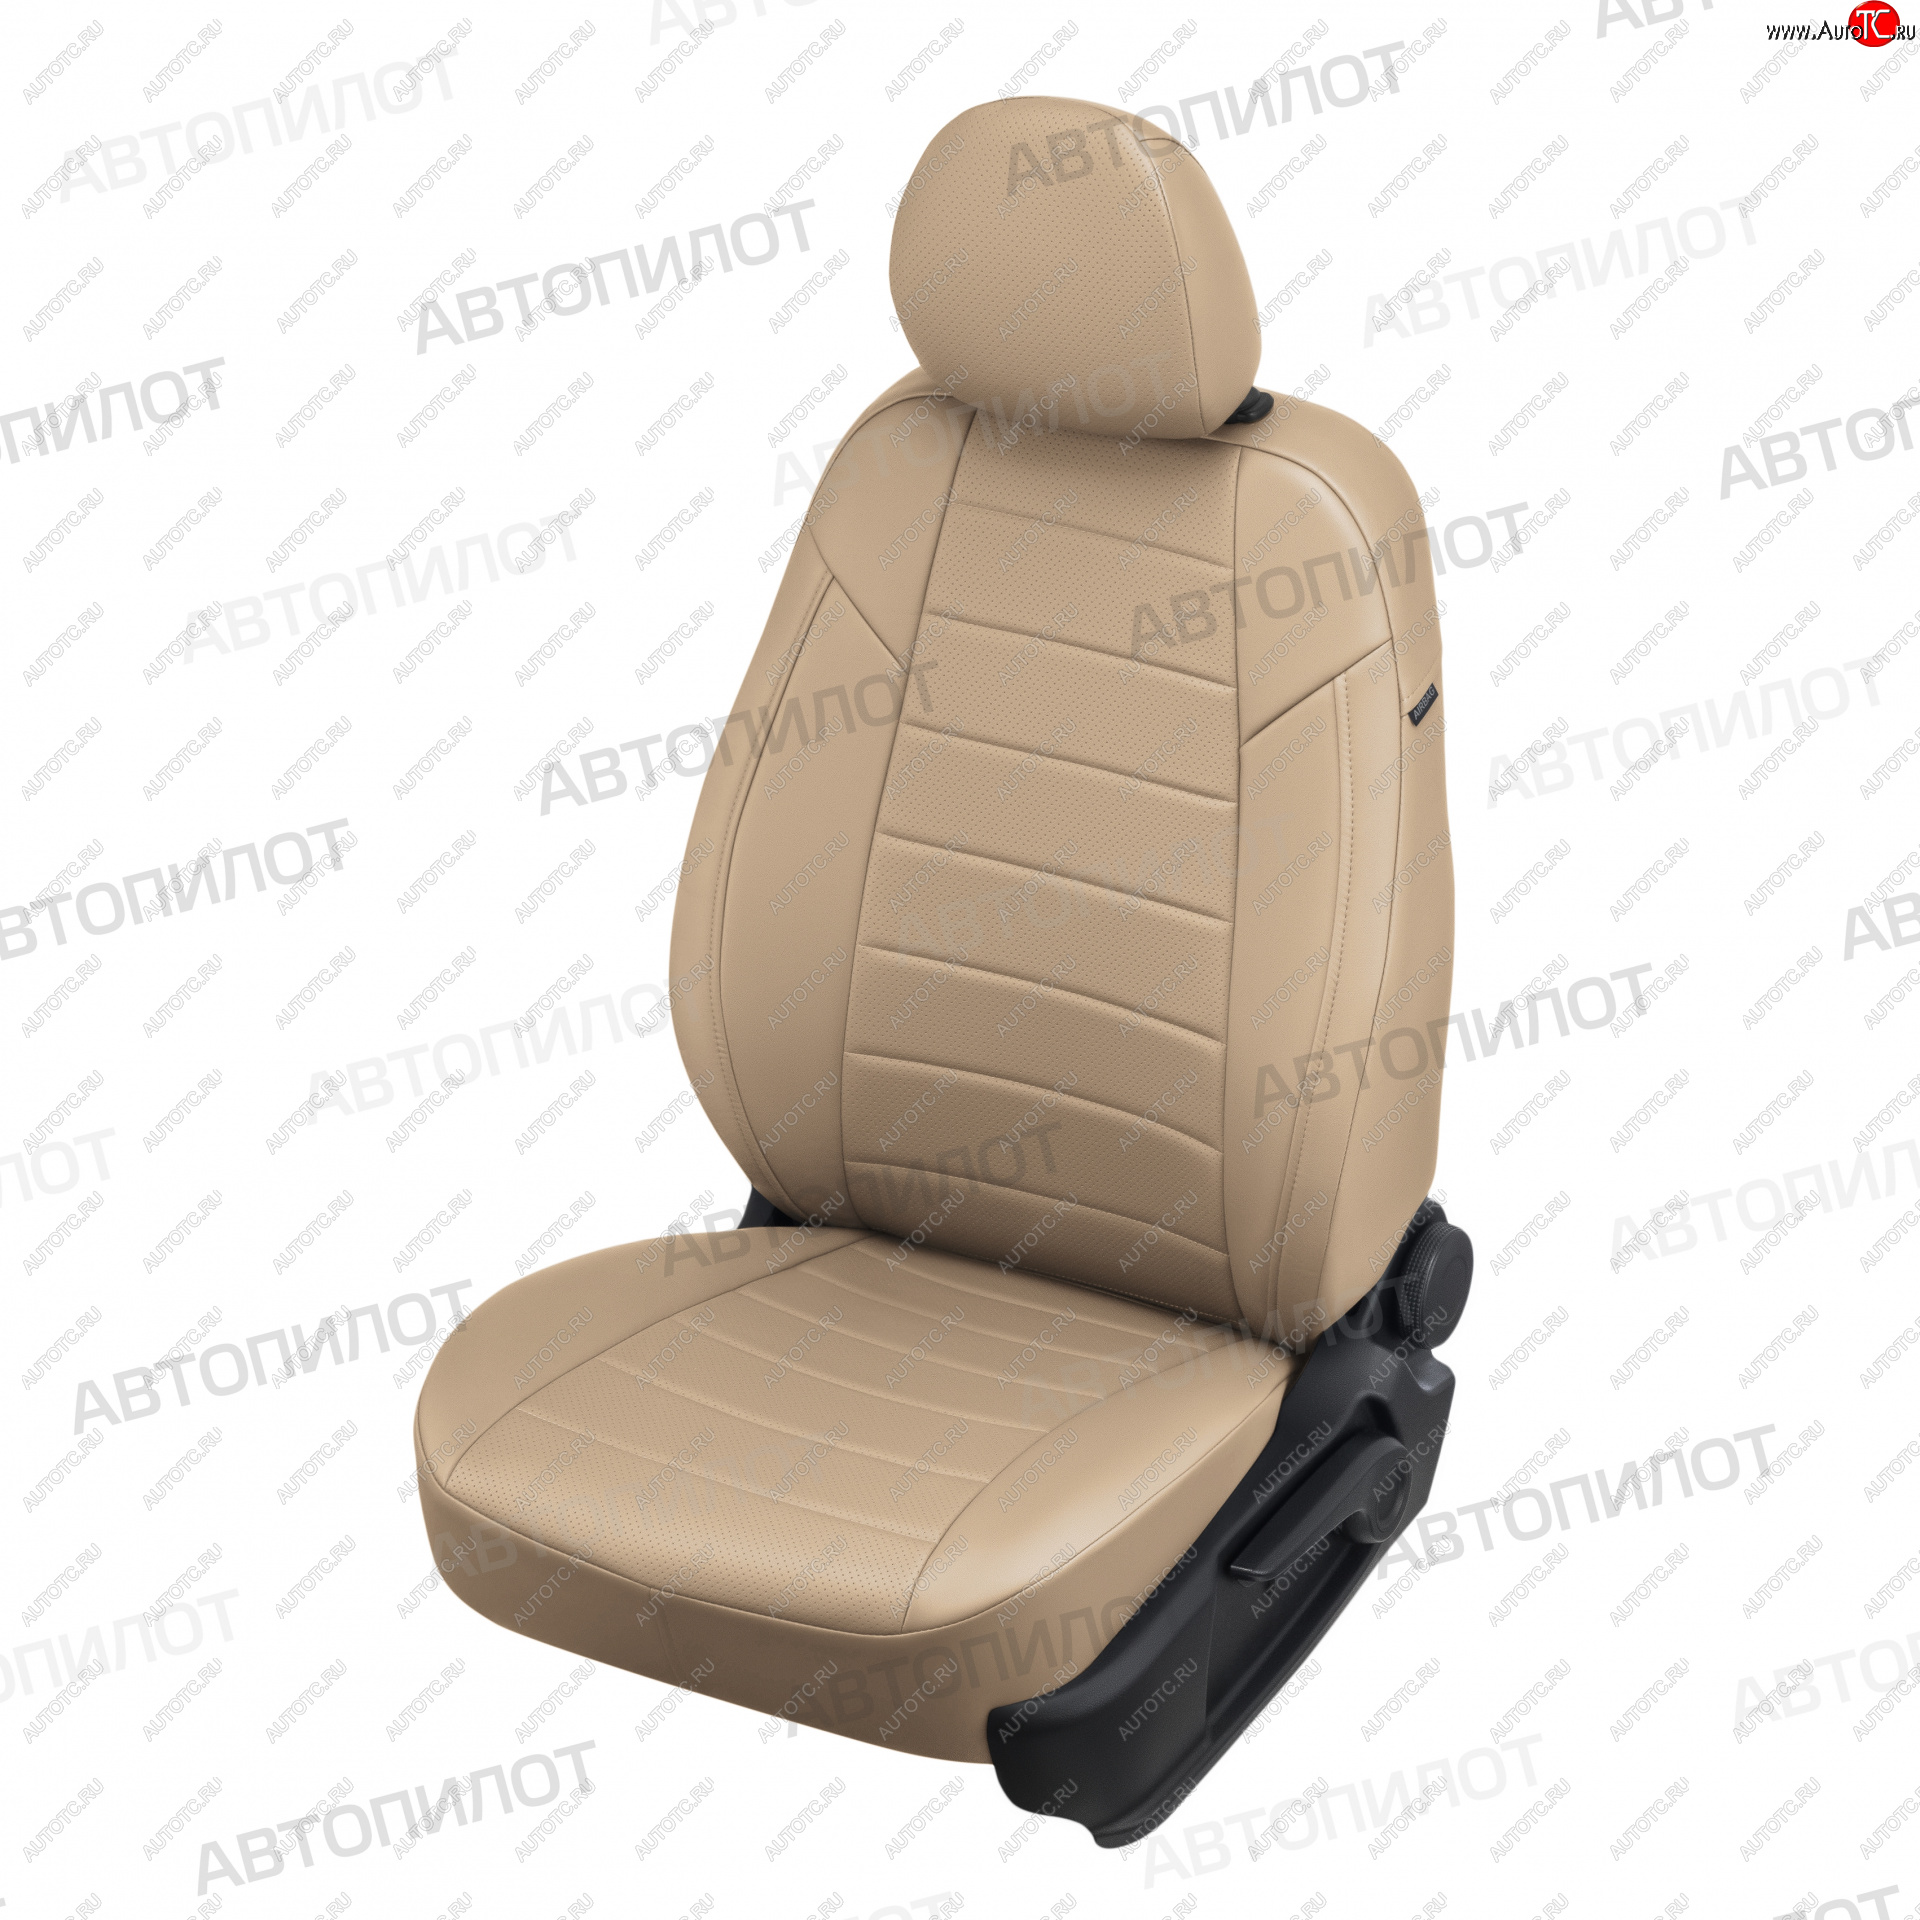 13 449 р. Чехлы сидений (5 мест, экокожа) Автопилот  Ford Galaxy  2 (2006-2015) (темно-бежевый)